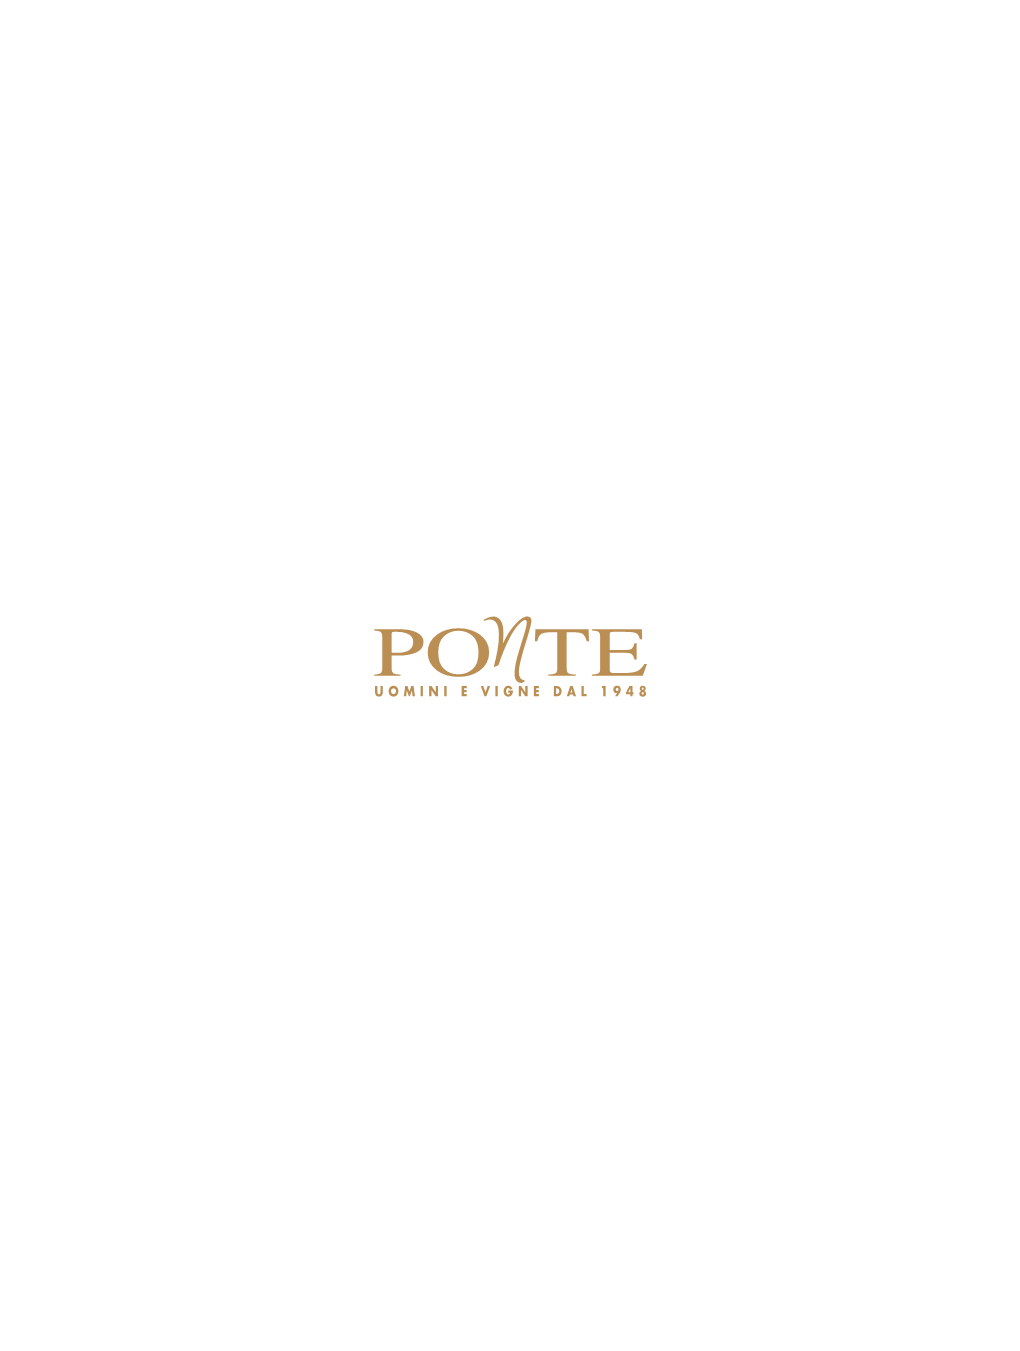 PONTE Company Profile 2020